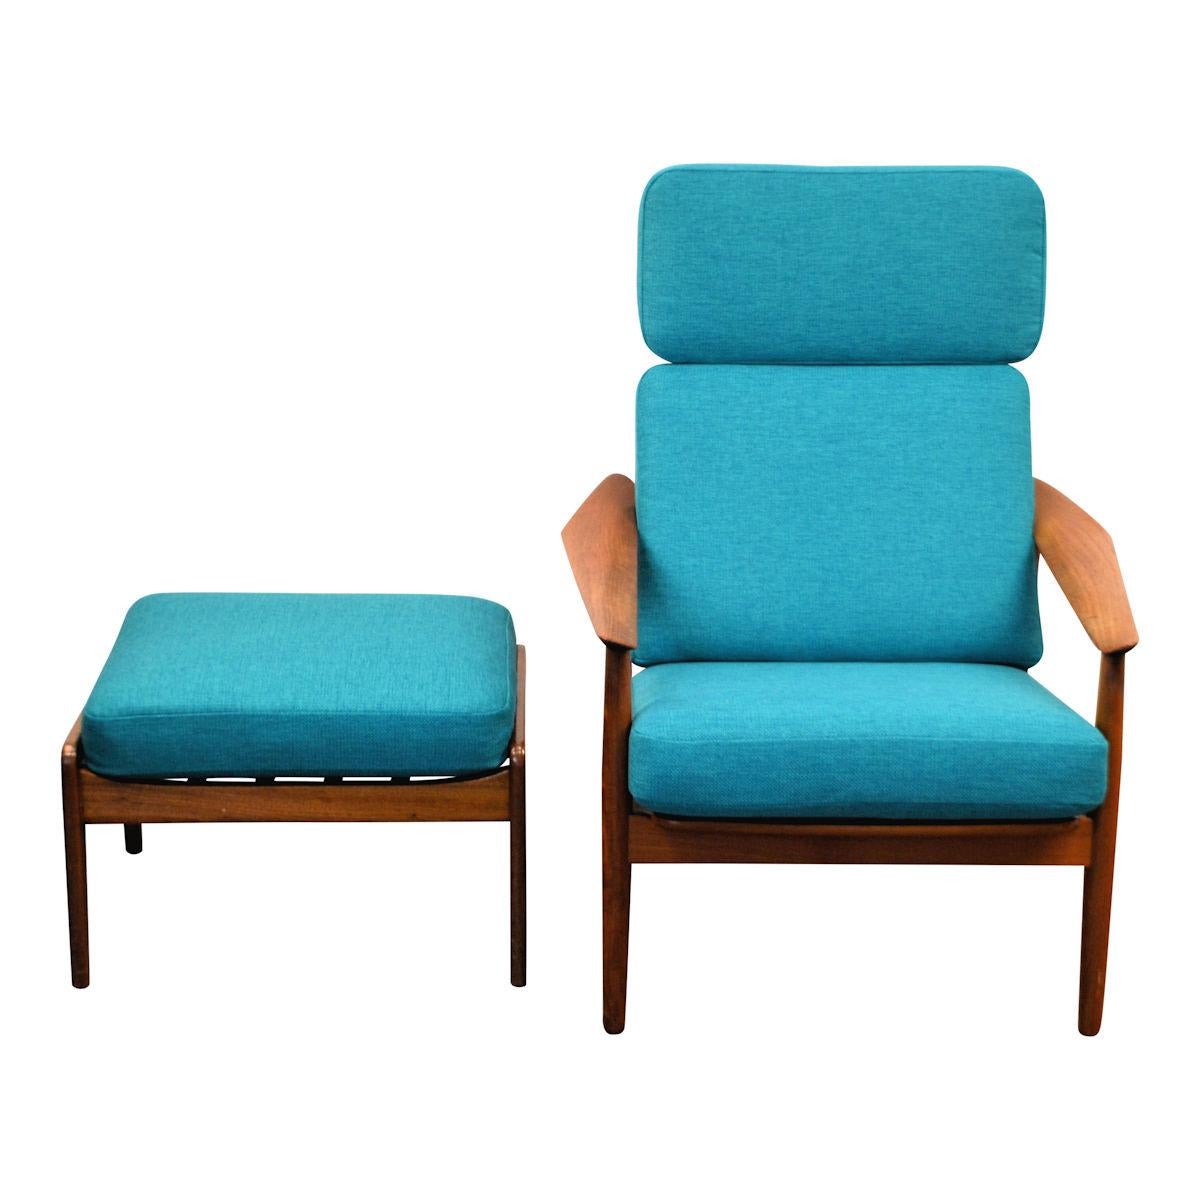 Vintage Arne Vodder Fd-164 Teak Lounge Chair and Ottoman For Sale 4